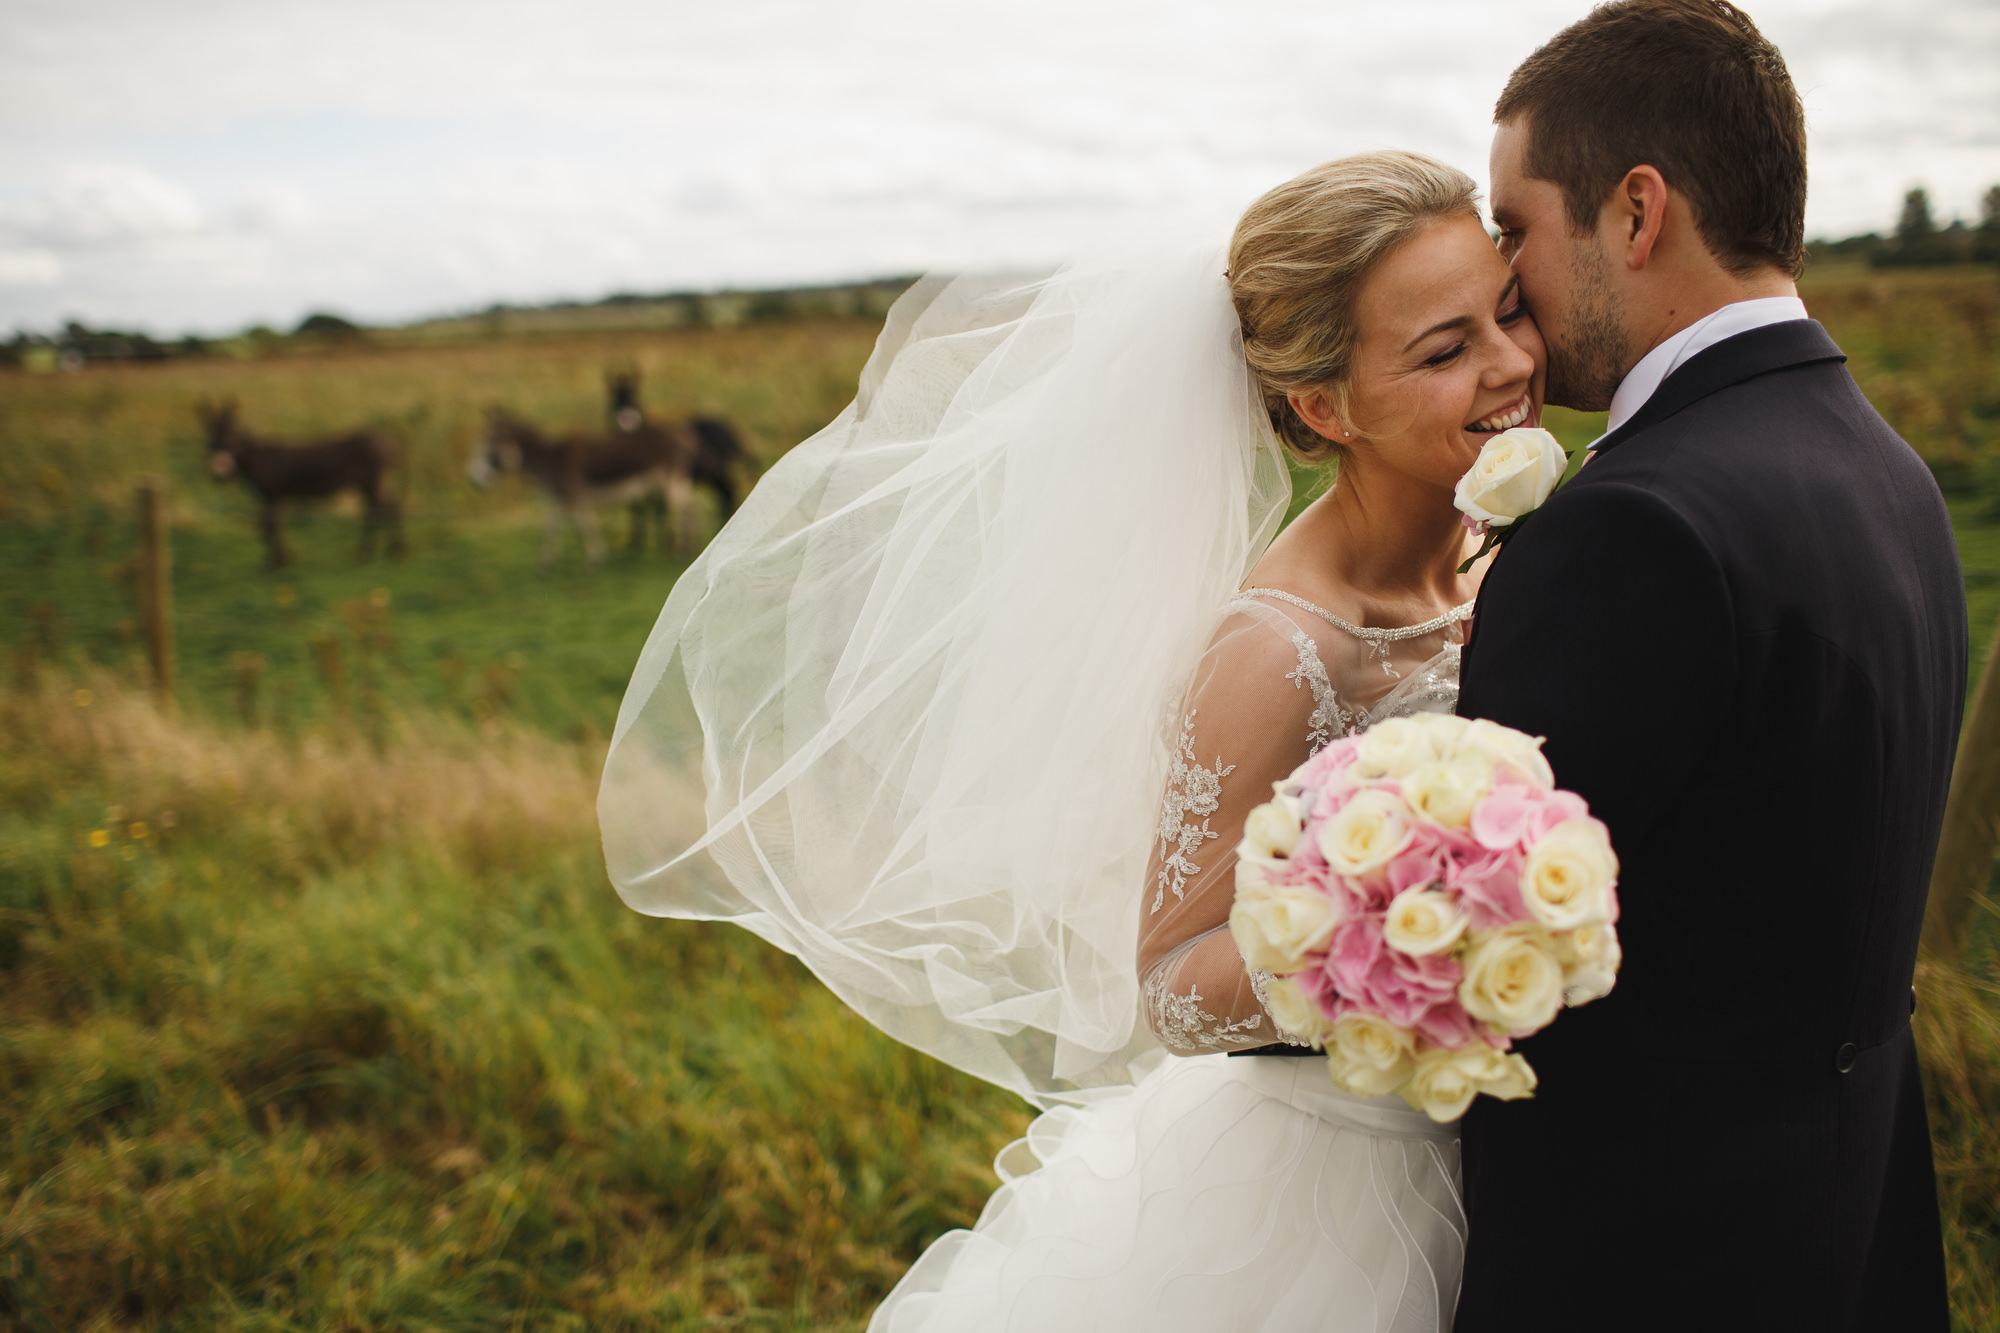 Farm wedding photography - arj photography